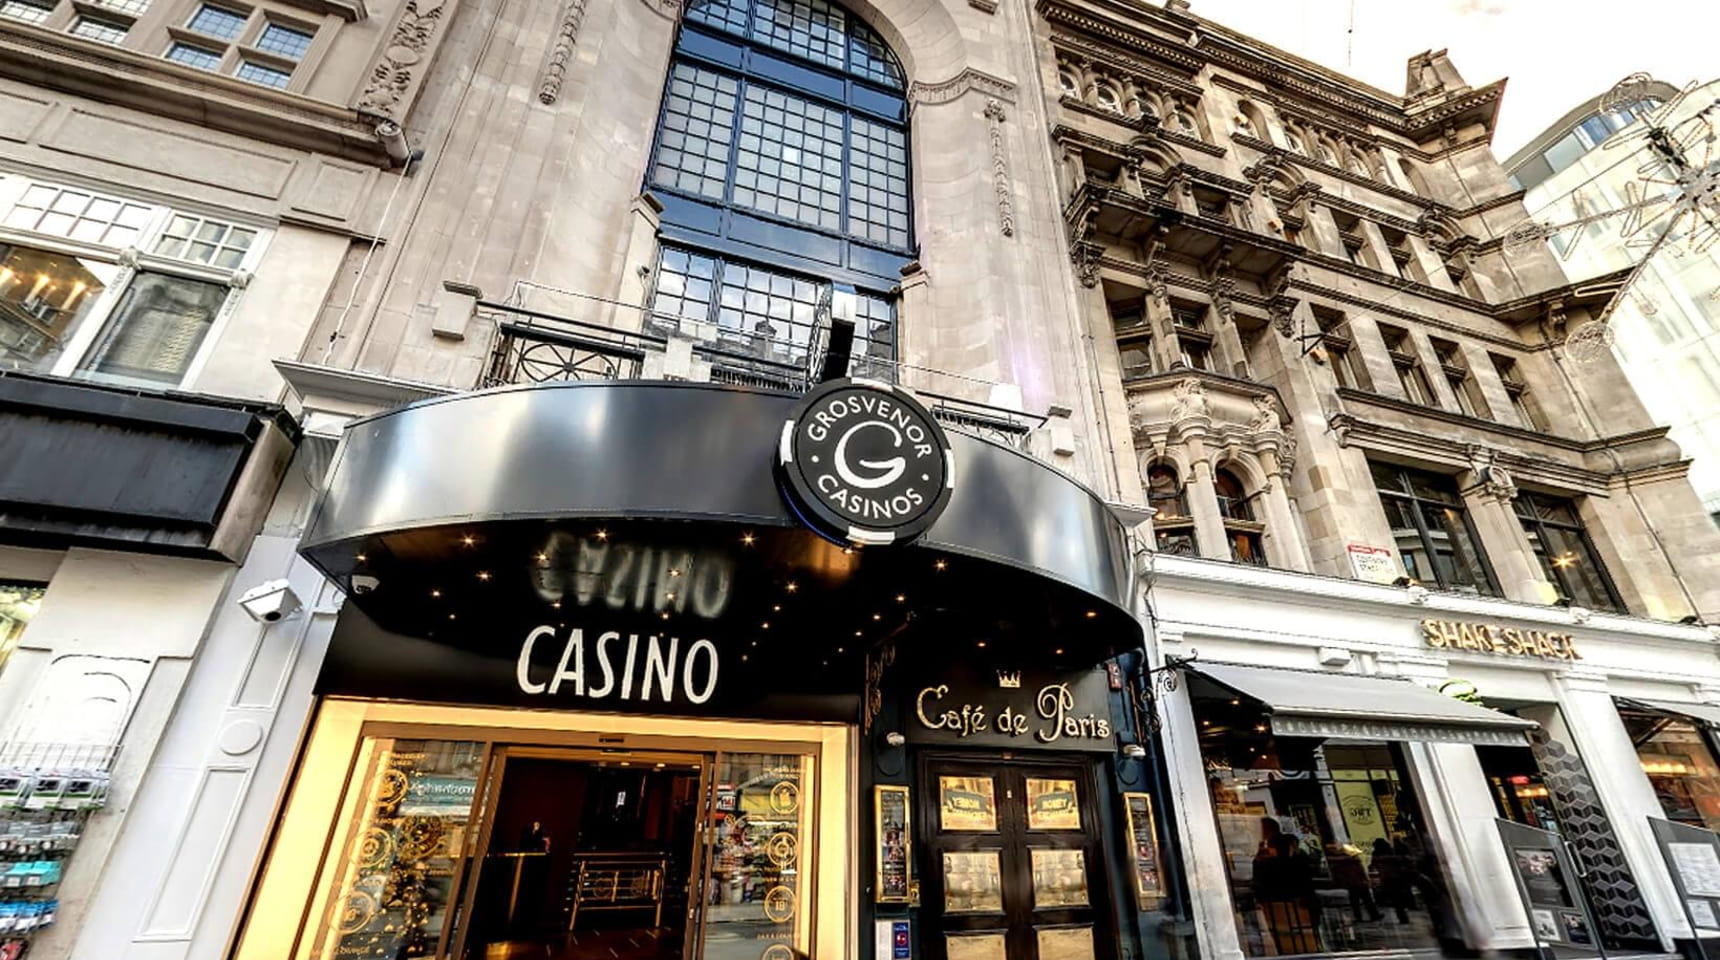 grosvenor casino london dress code